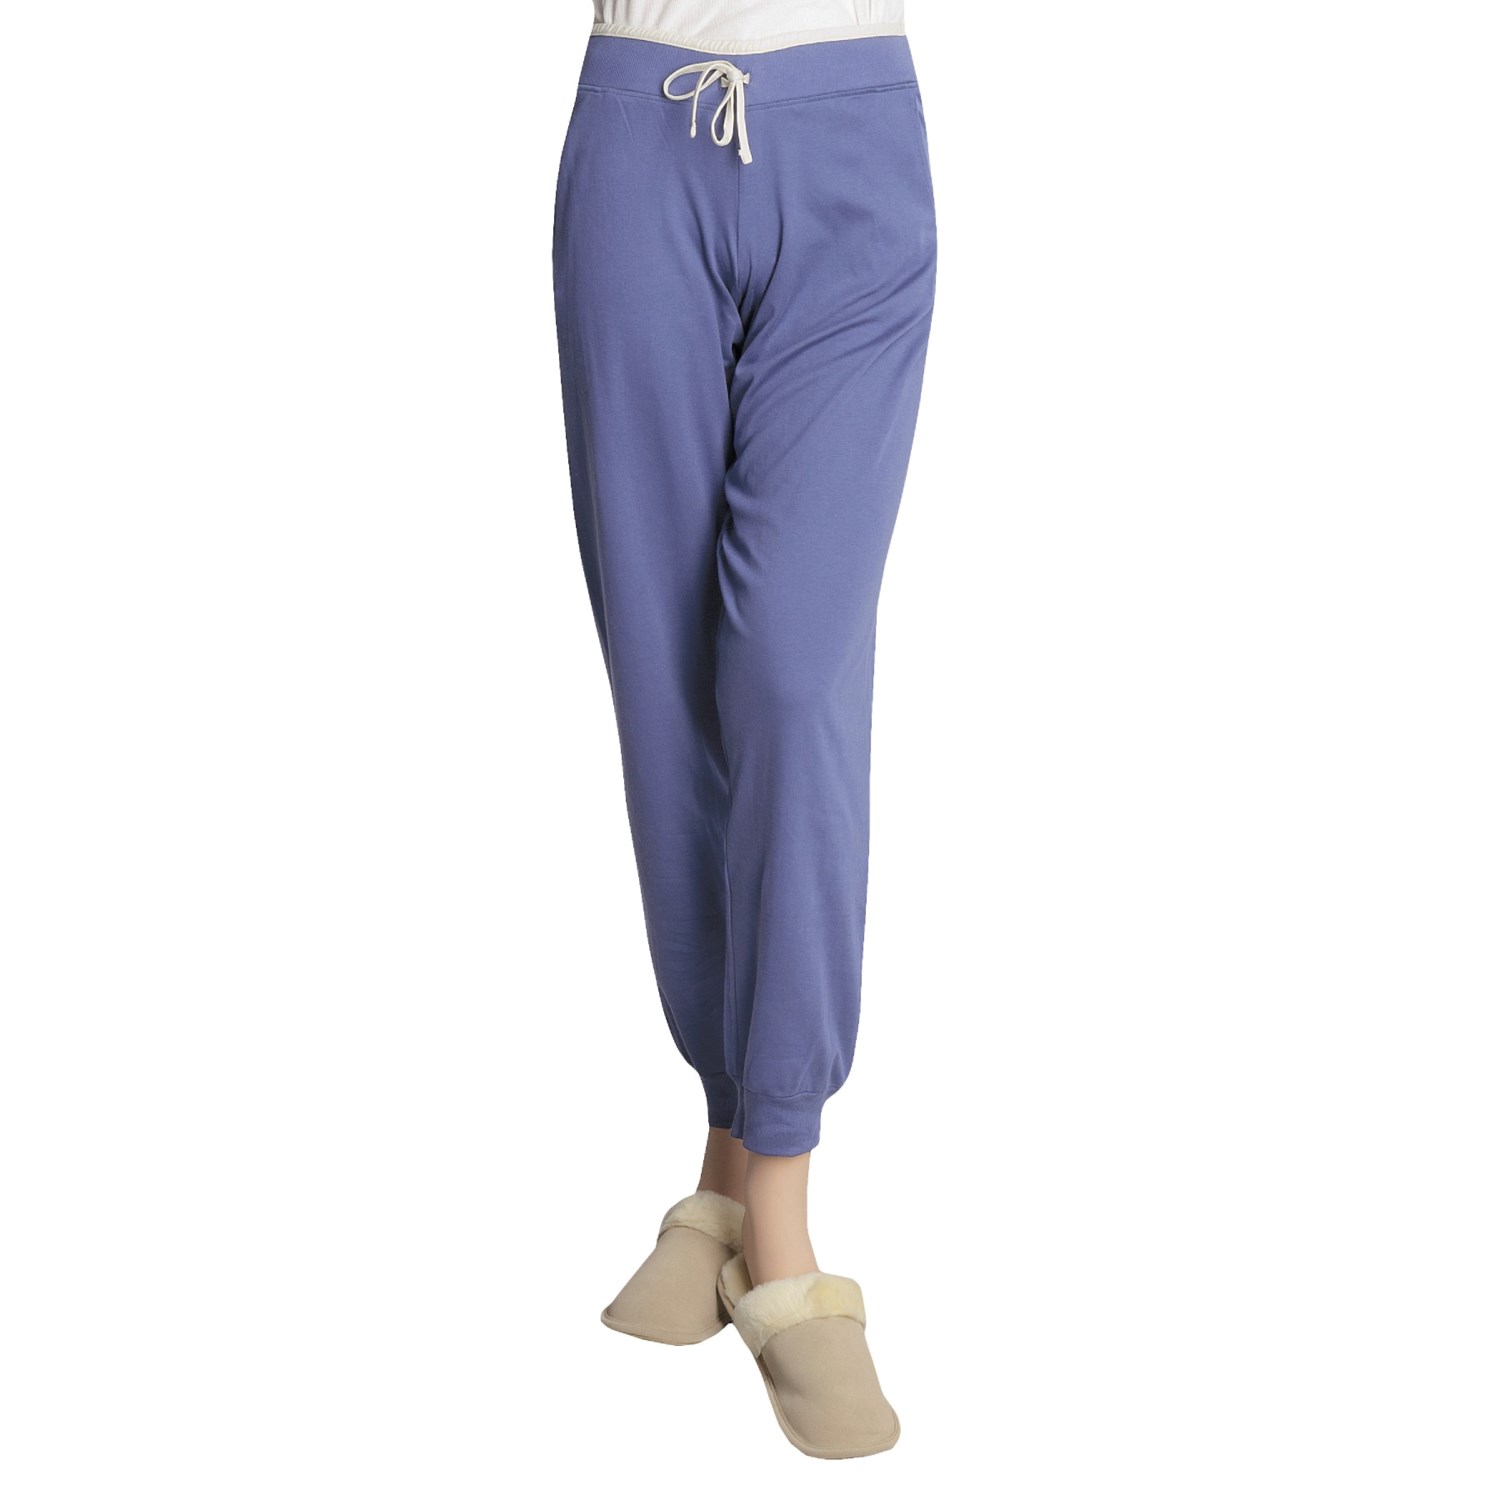 Calida Cotton Interlock Knit Pants (For Women) 2377W - Save 72%